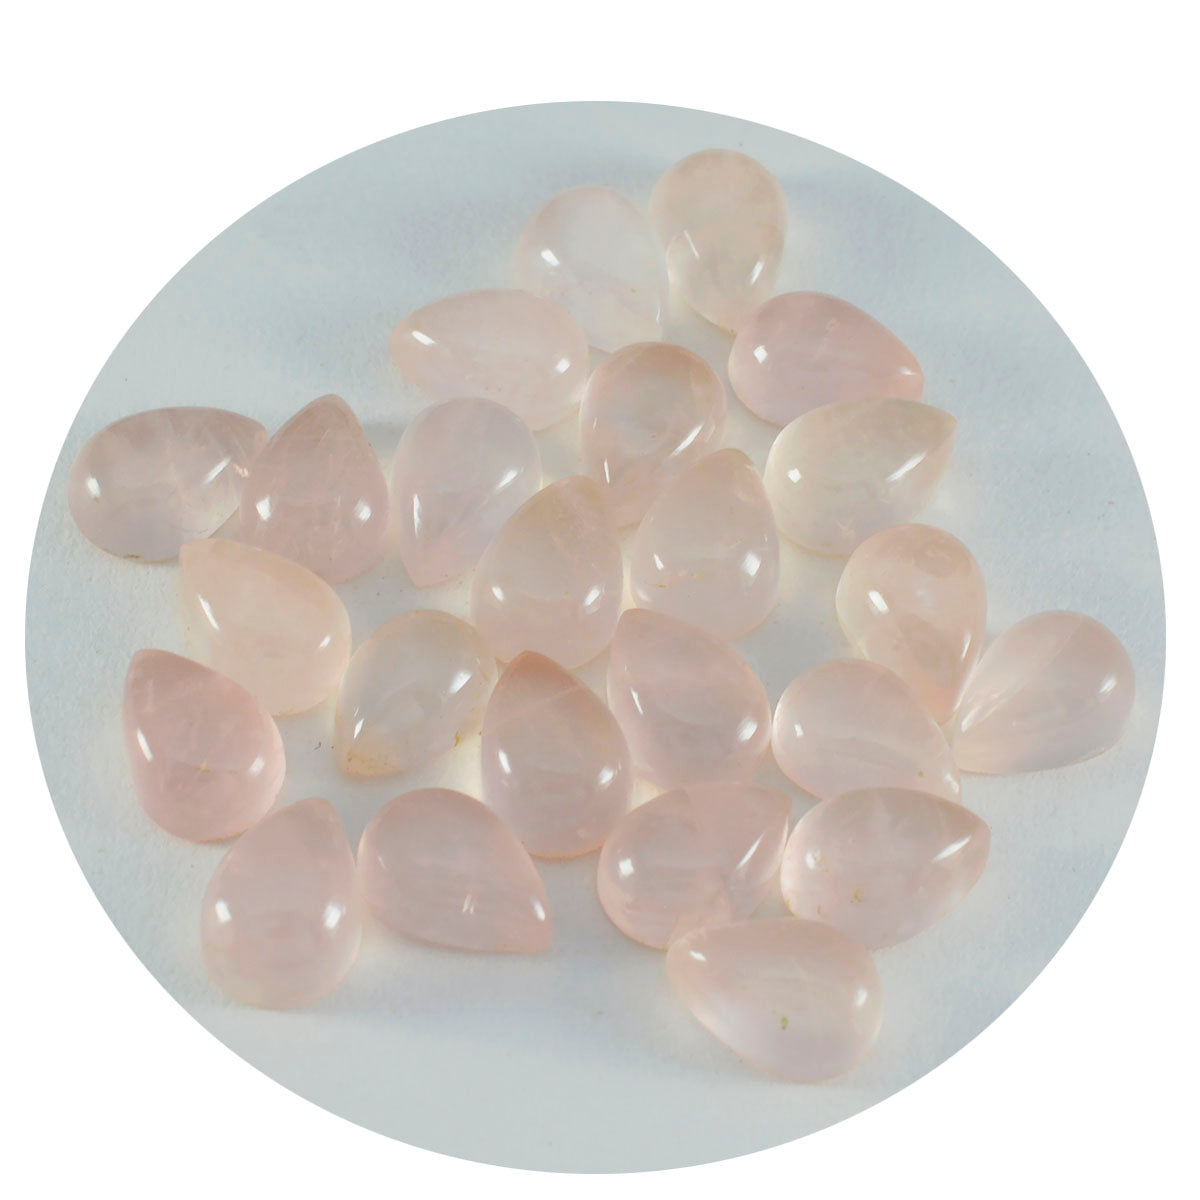 Riyogems 1PC Pink Rose Quartz Cabochon 6x9 mm Pear Shape beauty Quality Loose Gems